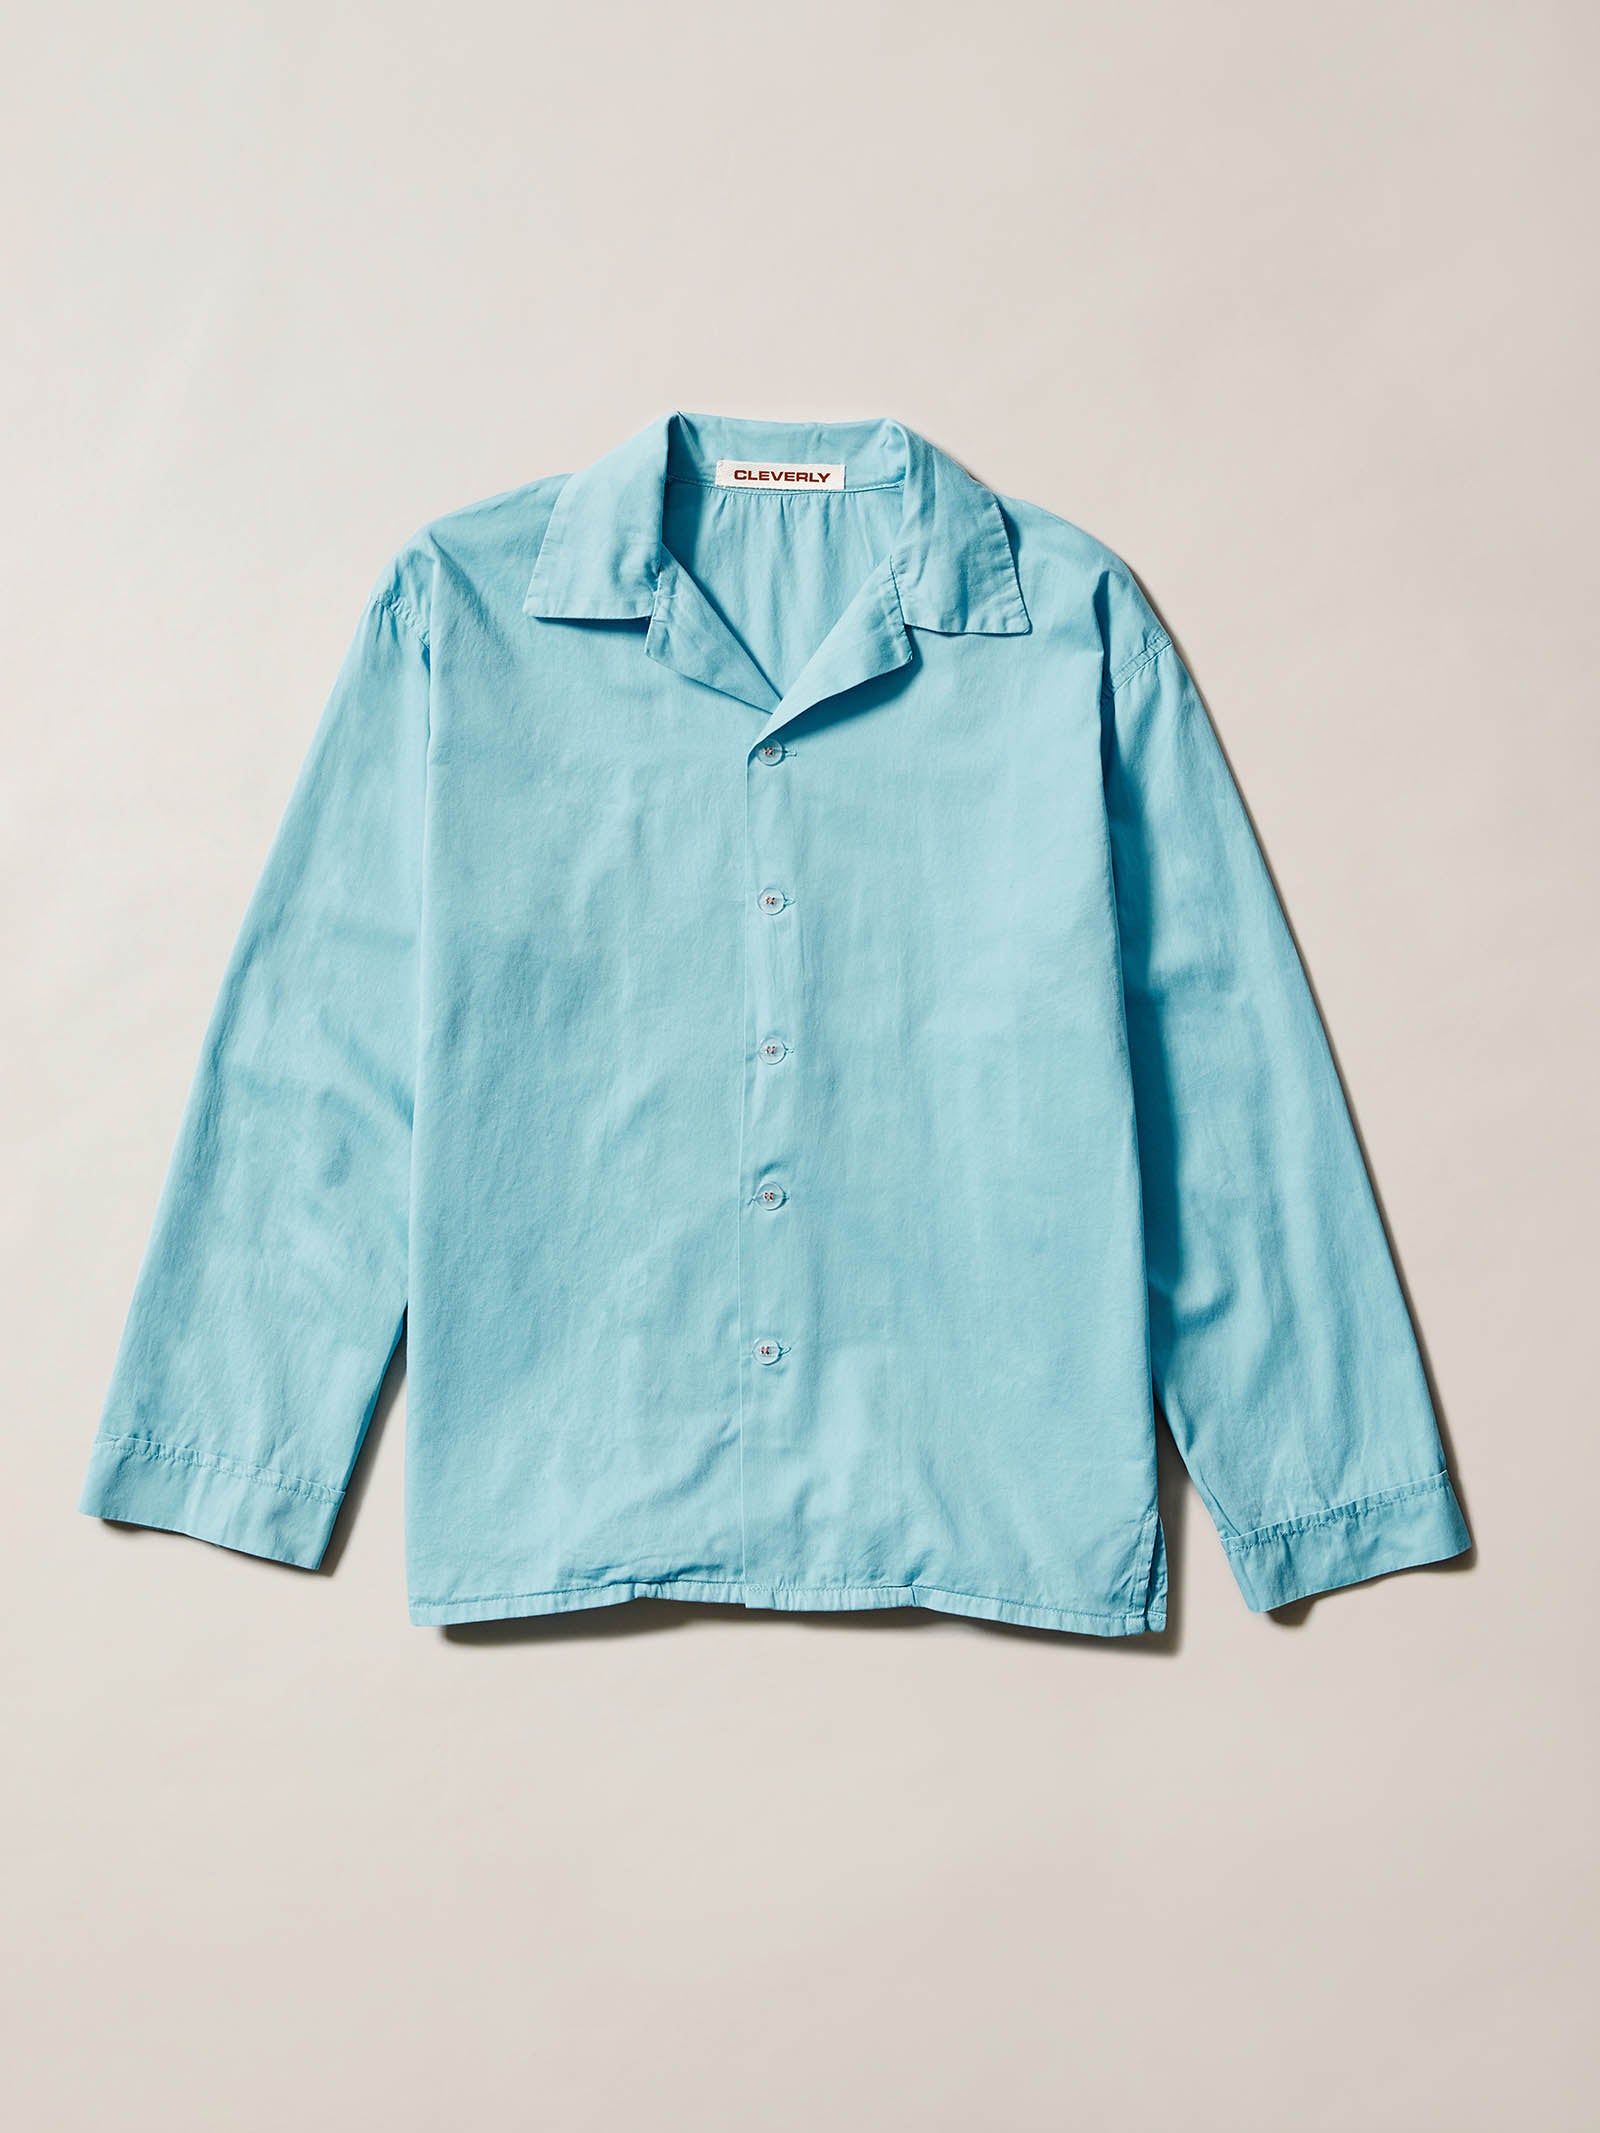 100% cotton pyjamas, soft long sleeve shirt, long sleeve pyjama shirt, blue lounge shirt